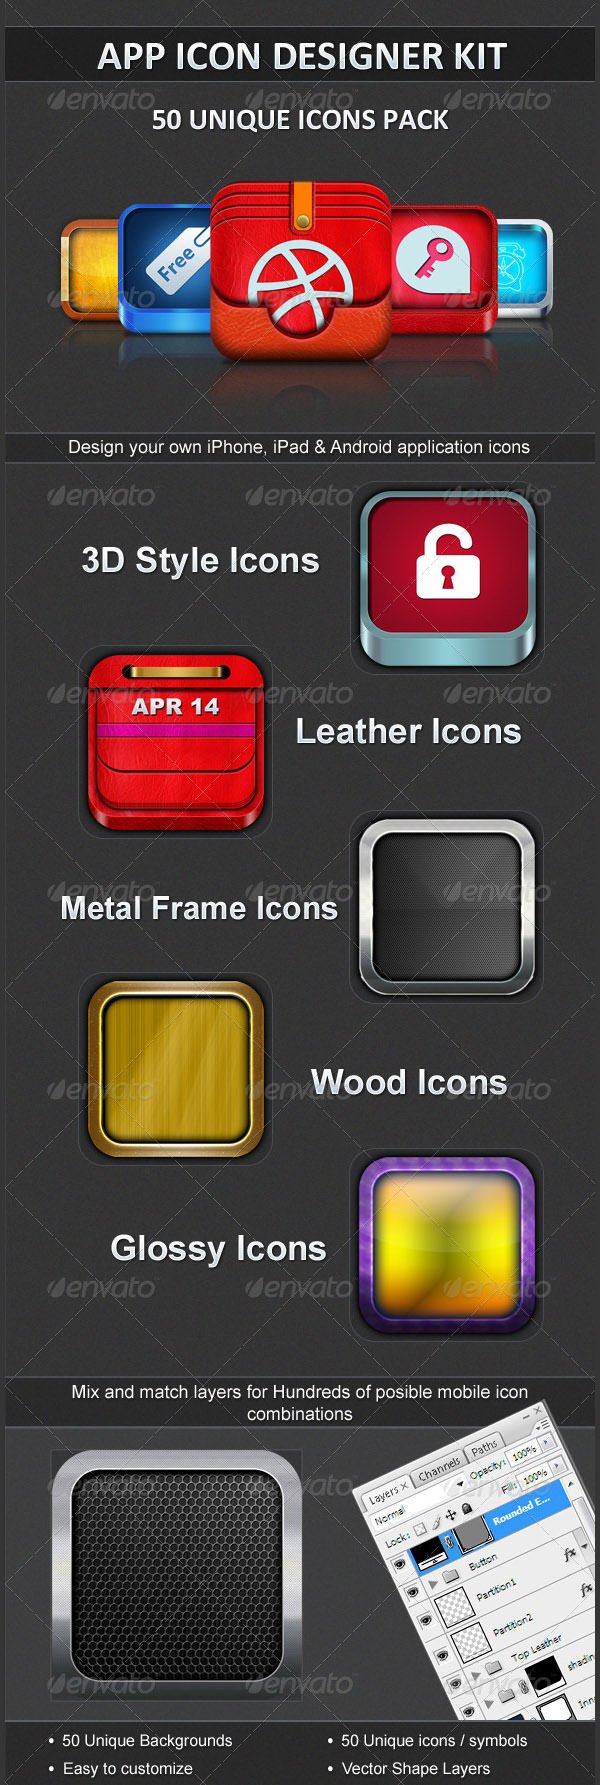 app icon designer kit